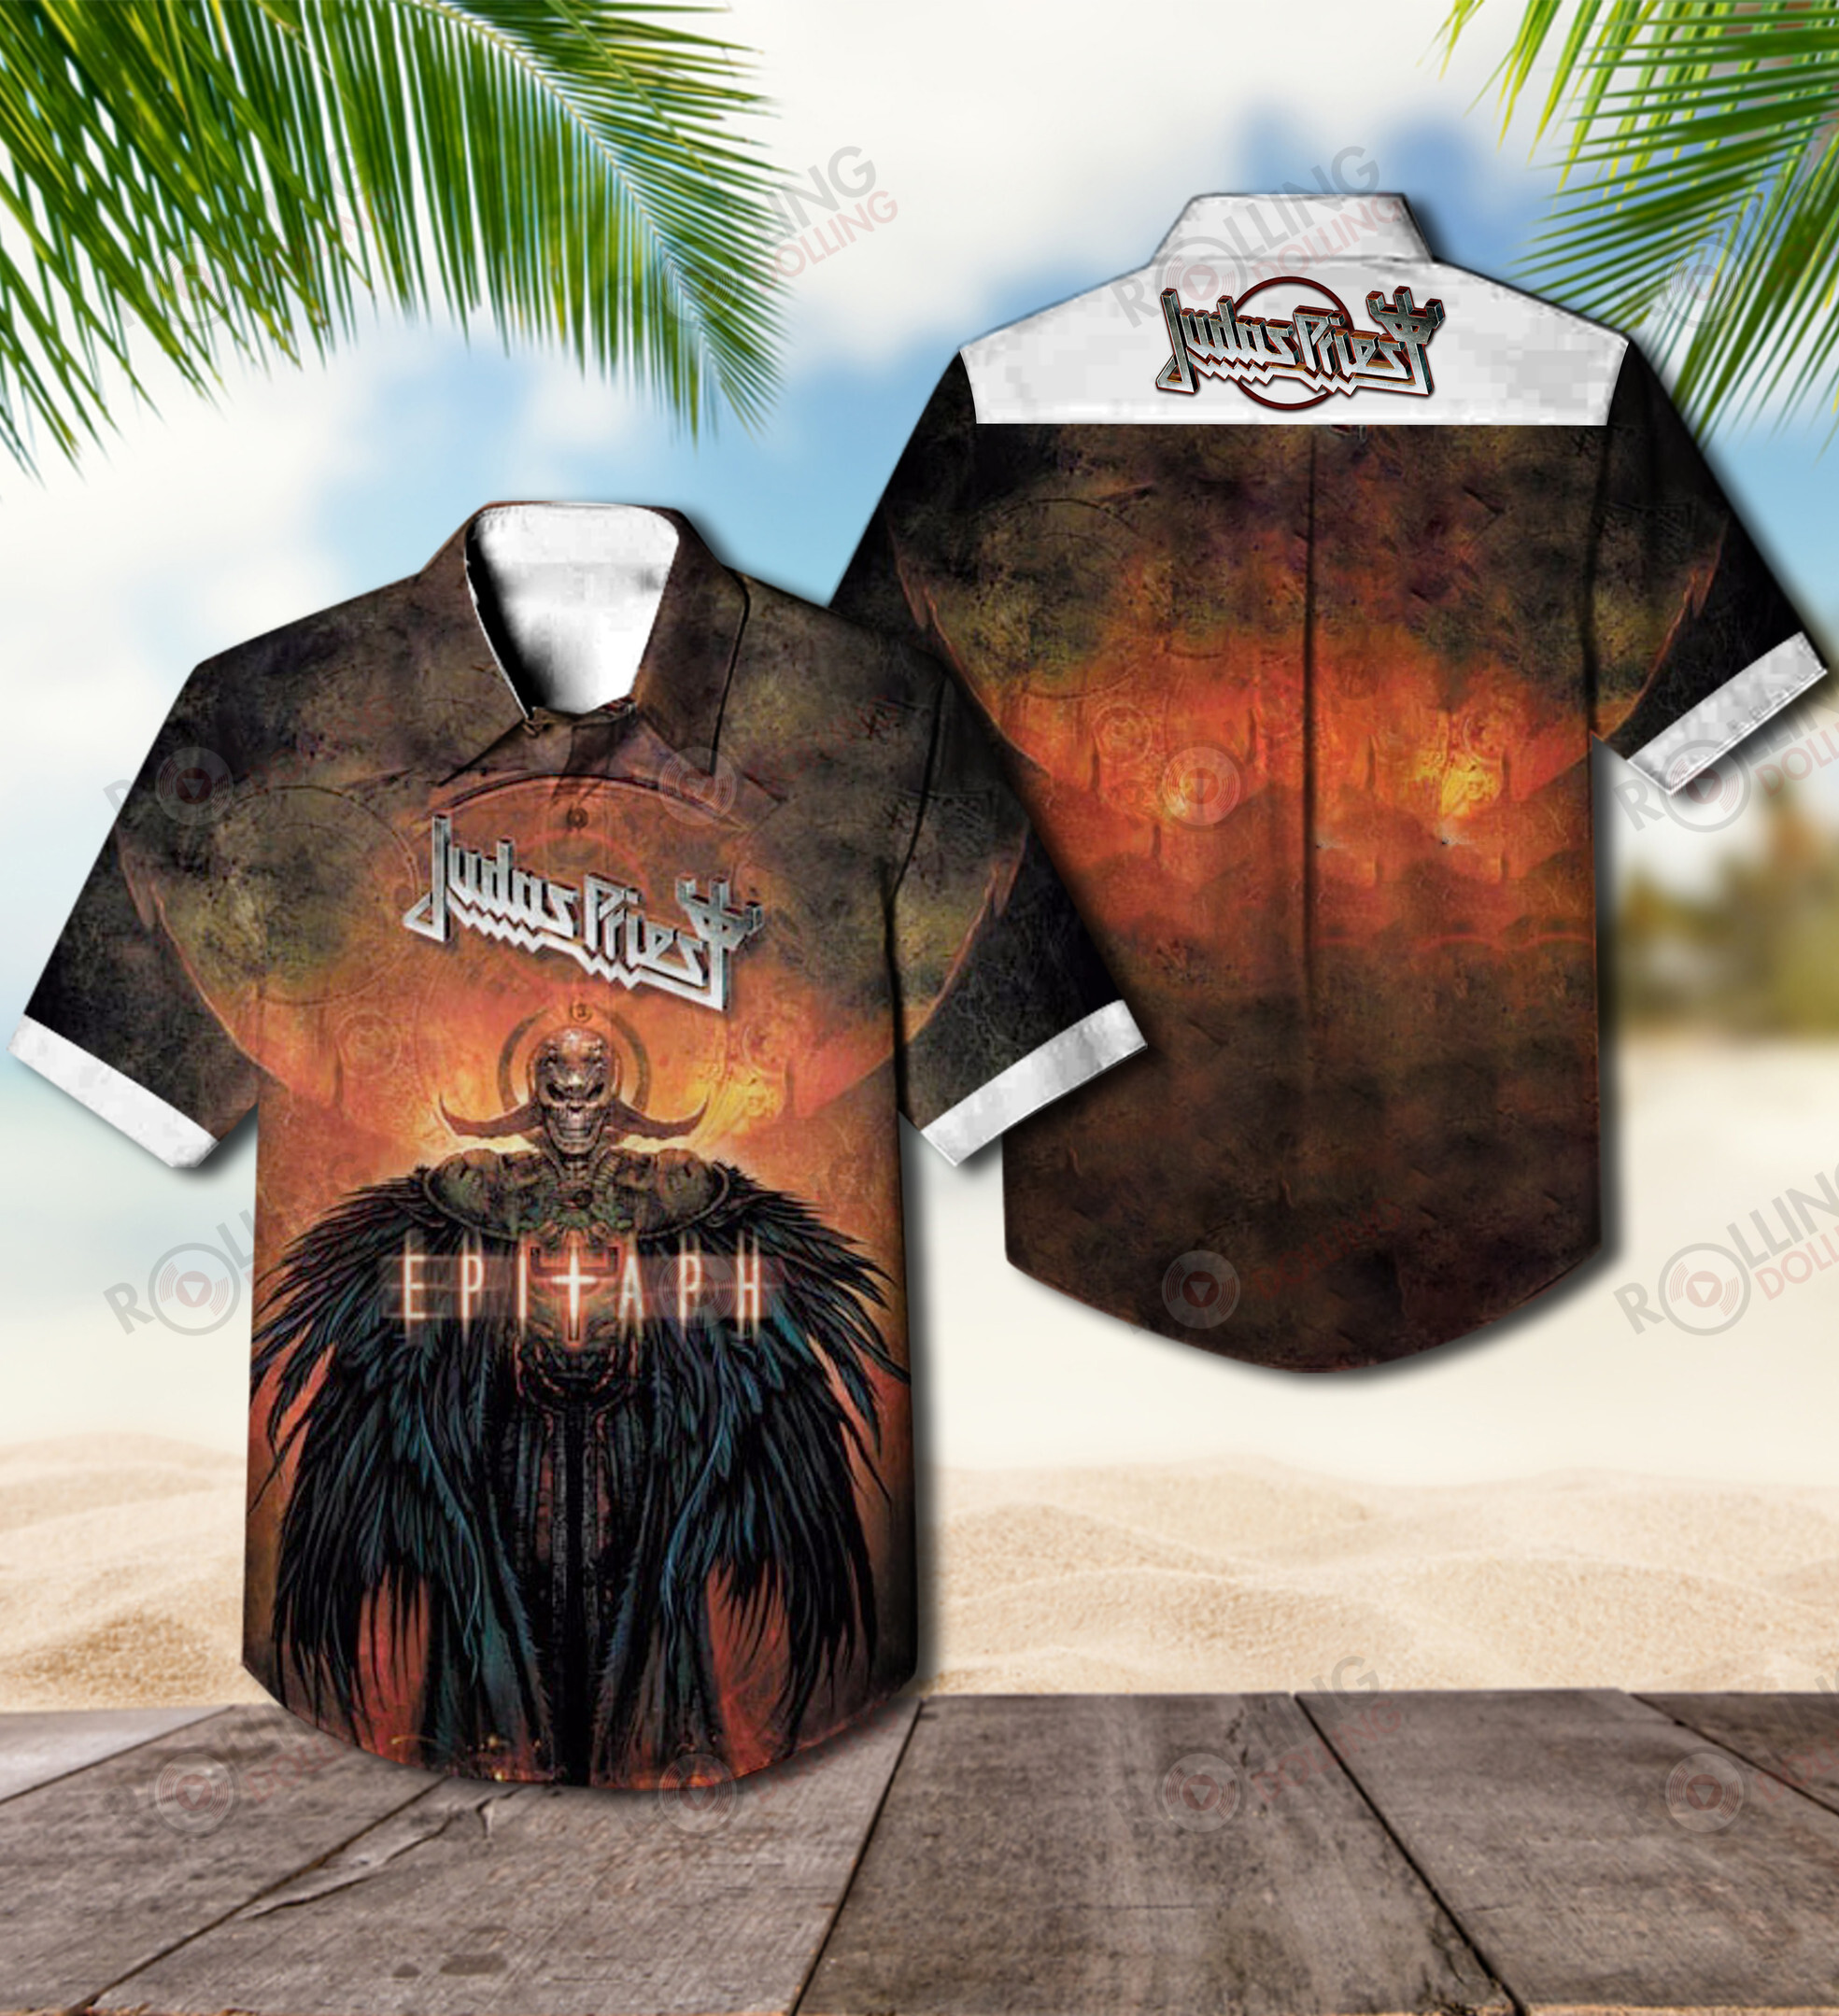 Regardless of their style, you will feel comfortable wearing Hawaiian Shirt 18